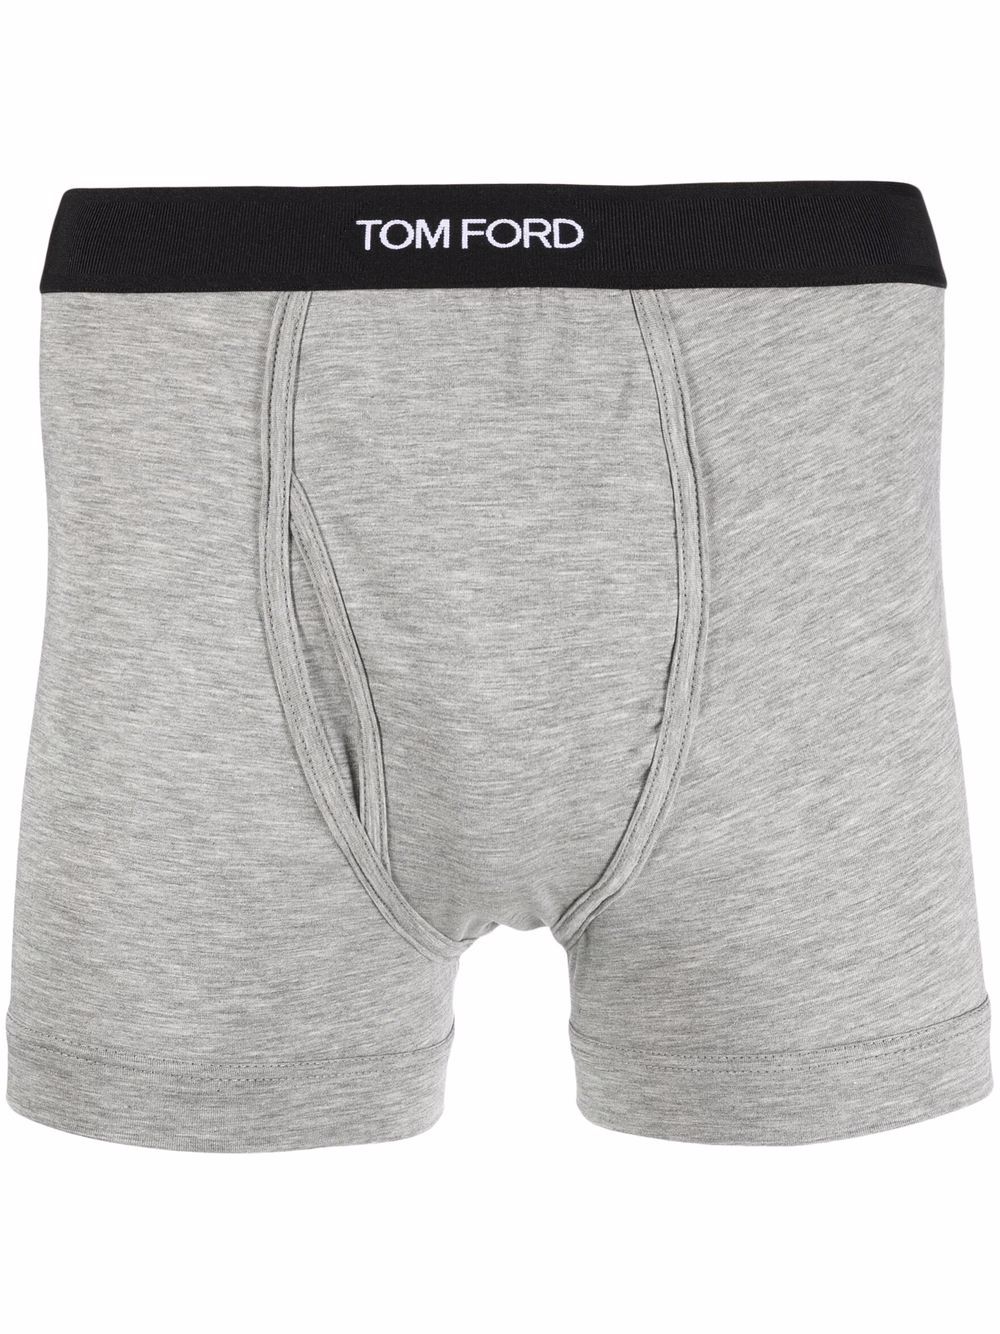 TOM FORD logo-waistband boxer briefs - Grey von TOM FORD